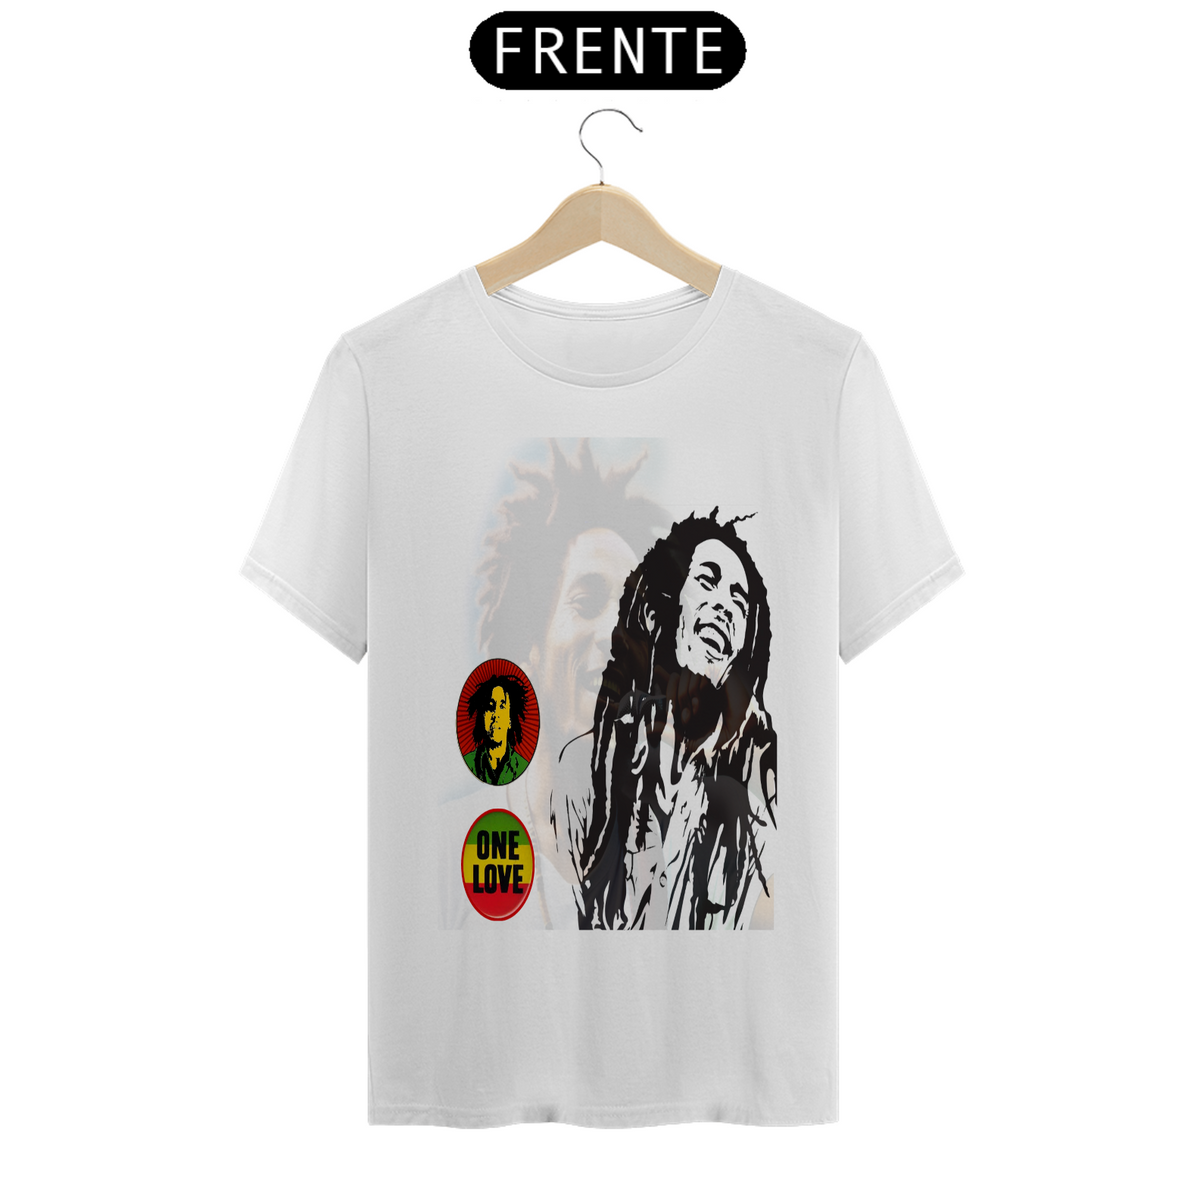 Nome do produto: Camisa Bob Marley